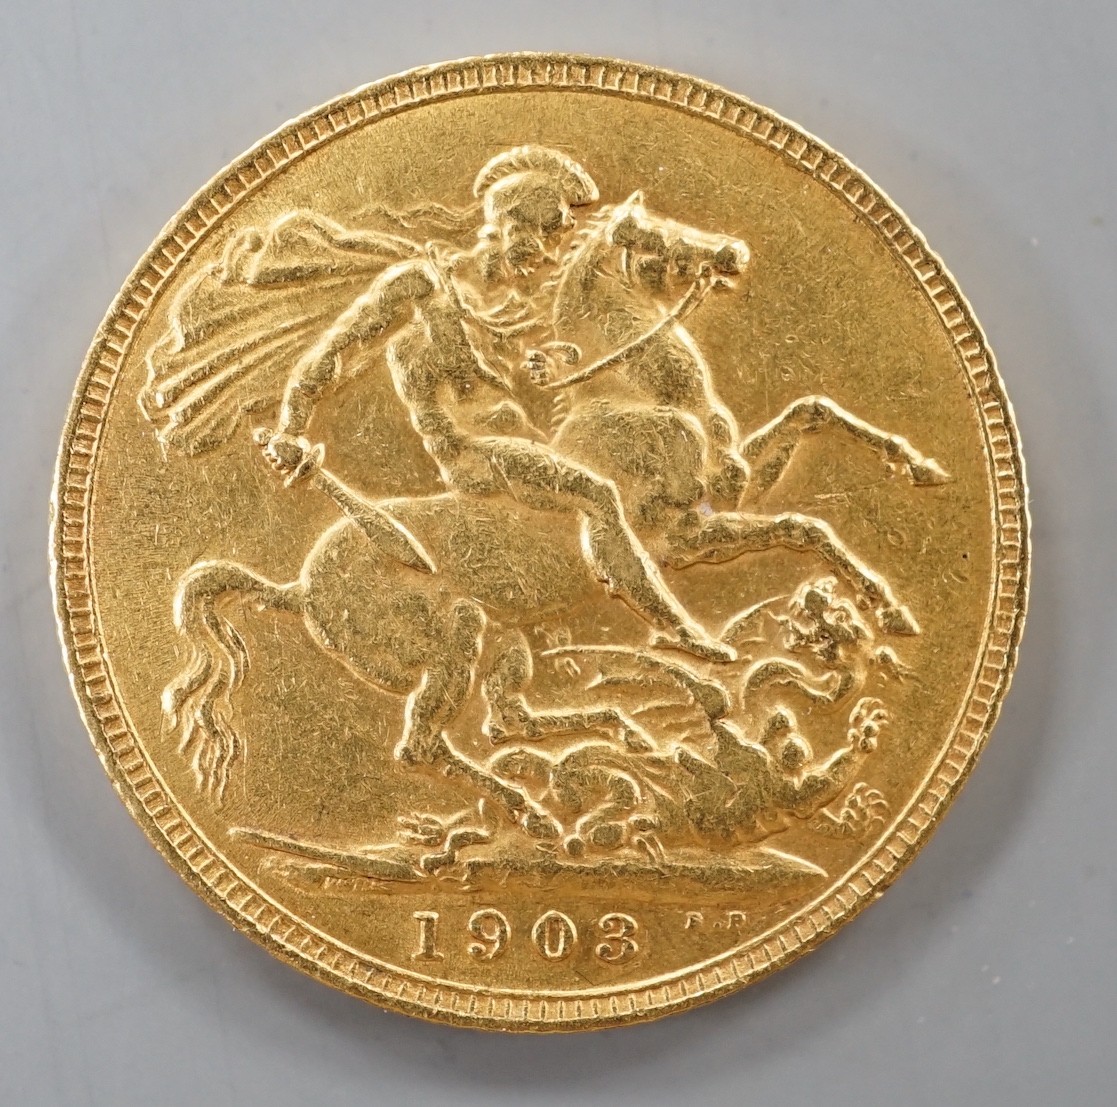 An Edward VII 1903 gold sovereign.